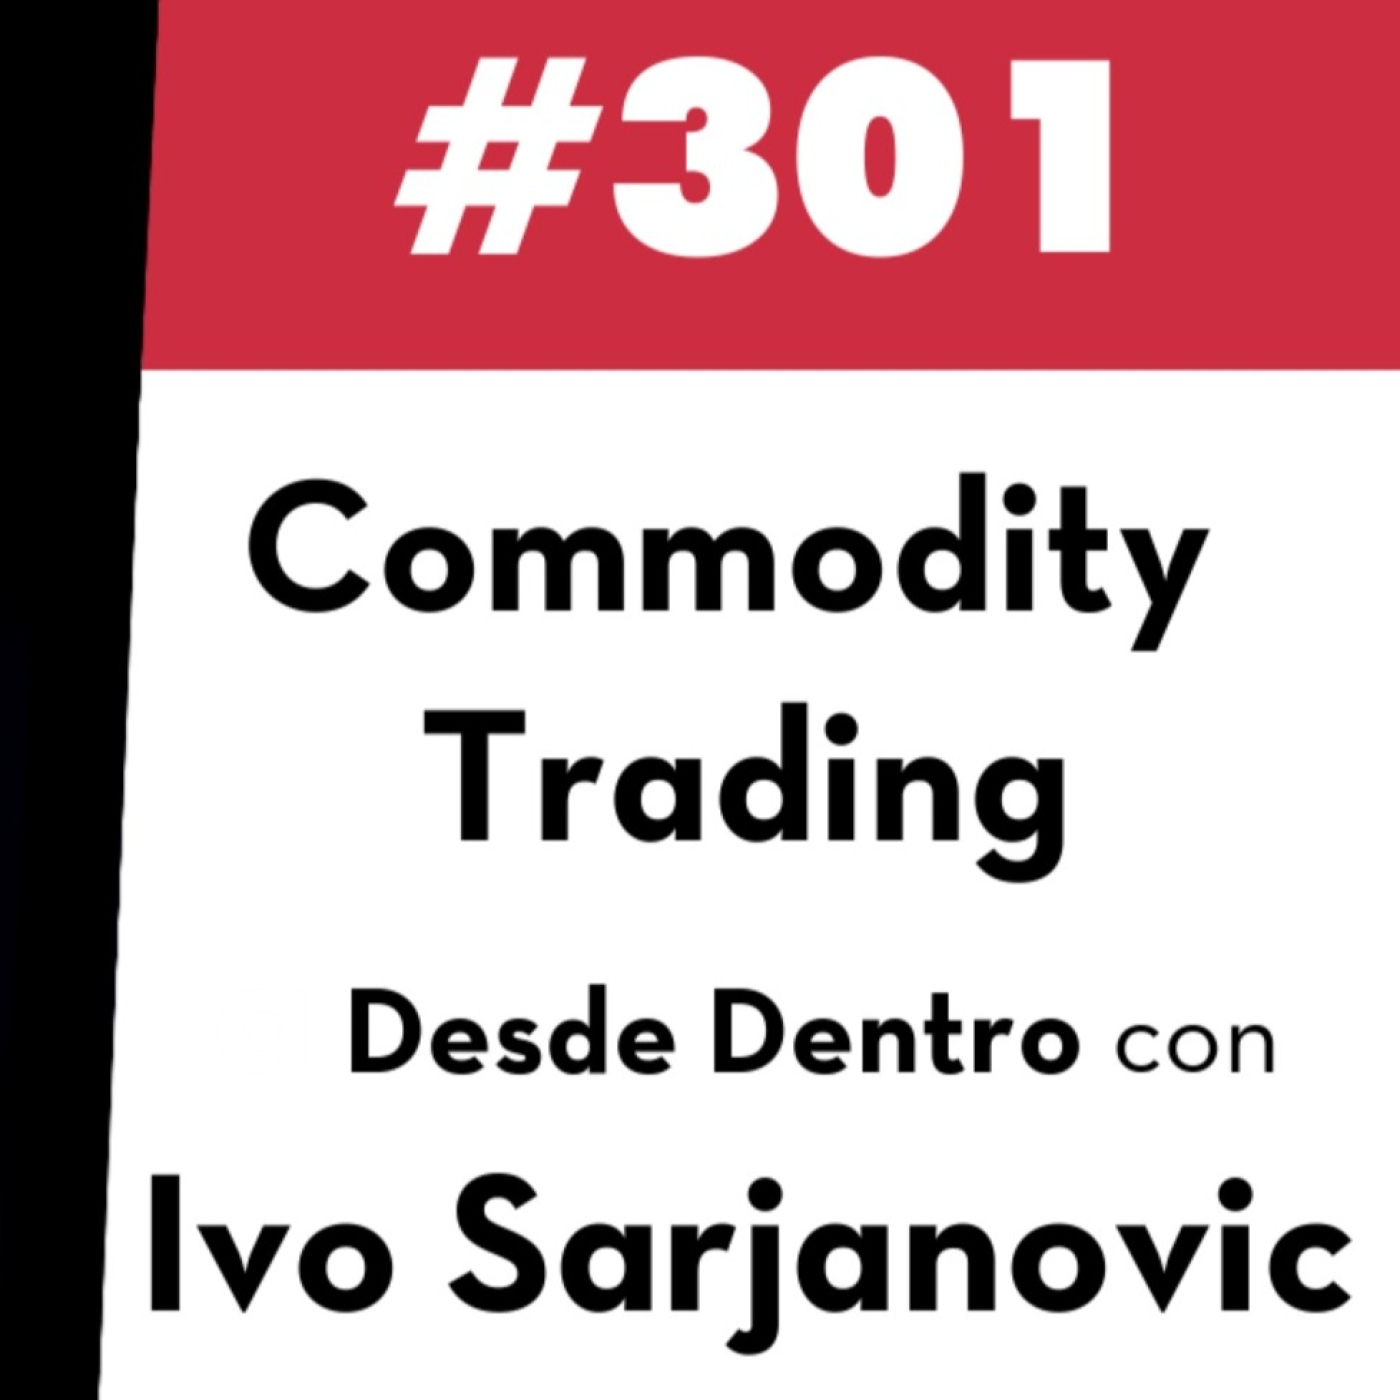 301. Commodity trading desde dentro con Ivo Sarjanovic